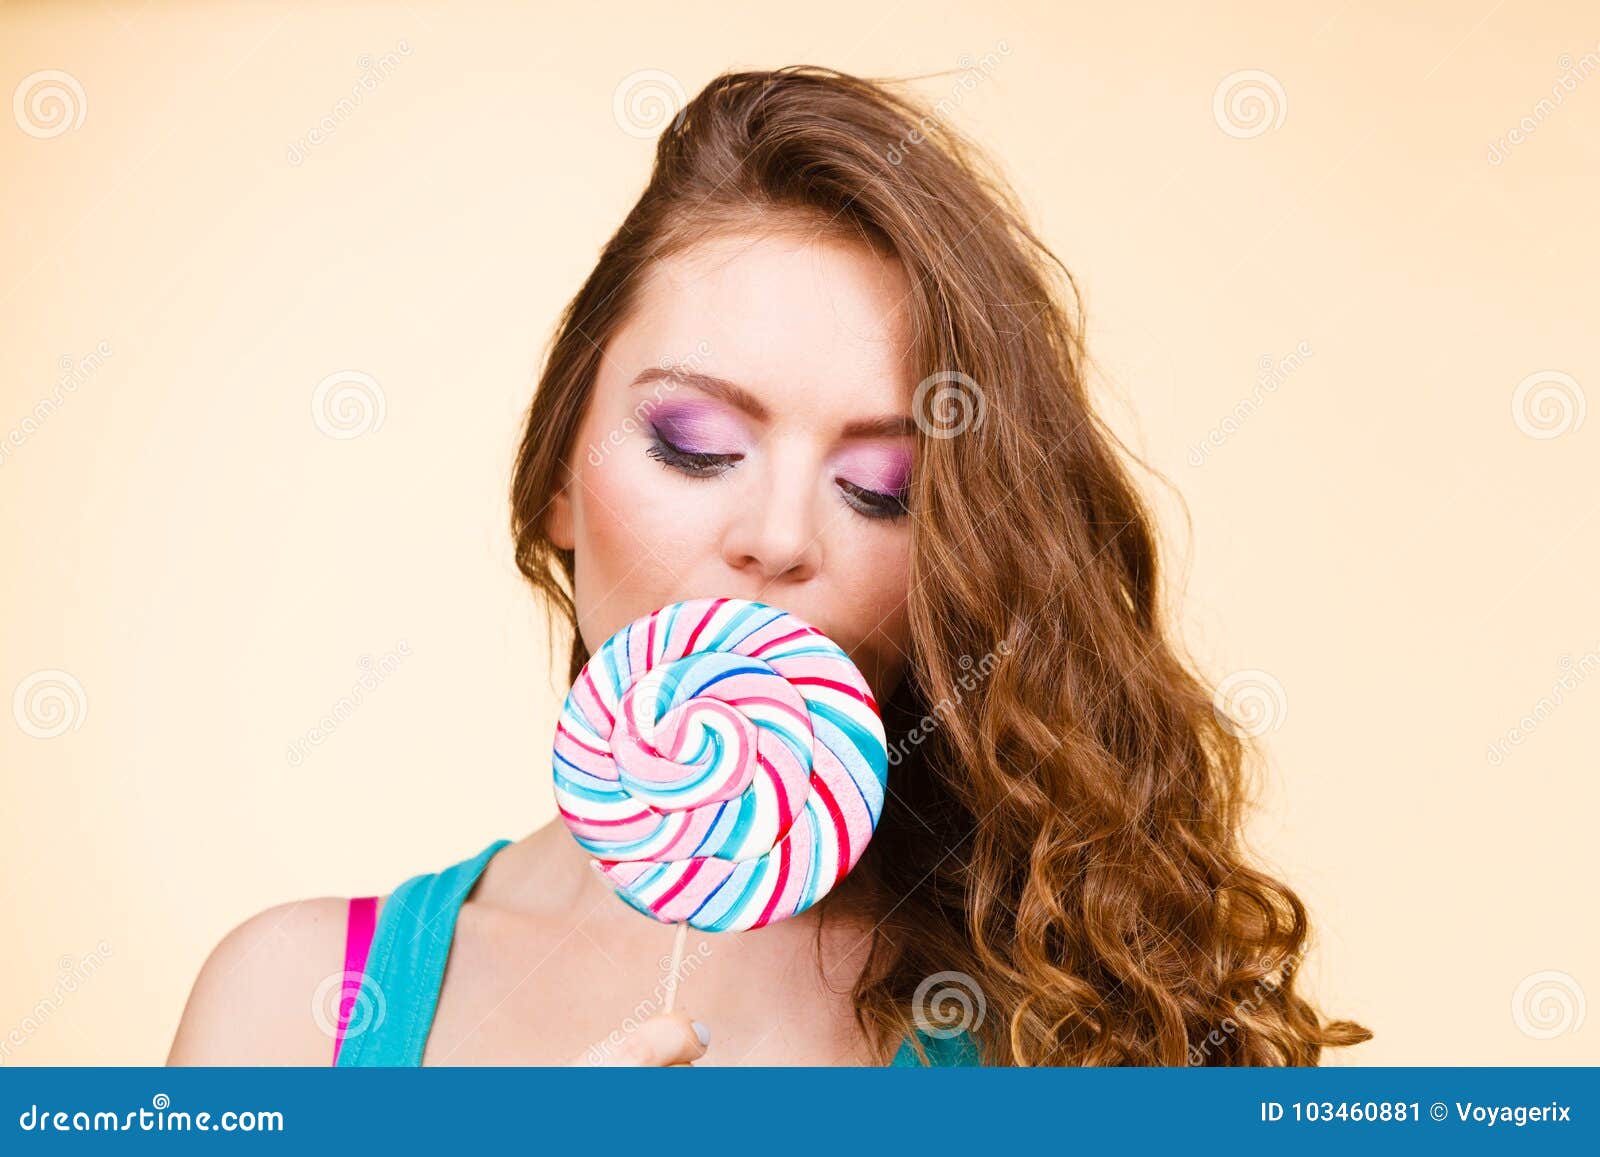 Woman Joyful Girl With Lollipop Candy Stock Image Image Of Lick Hair